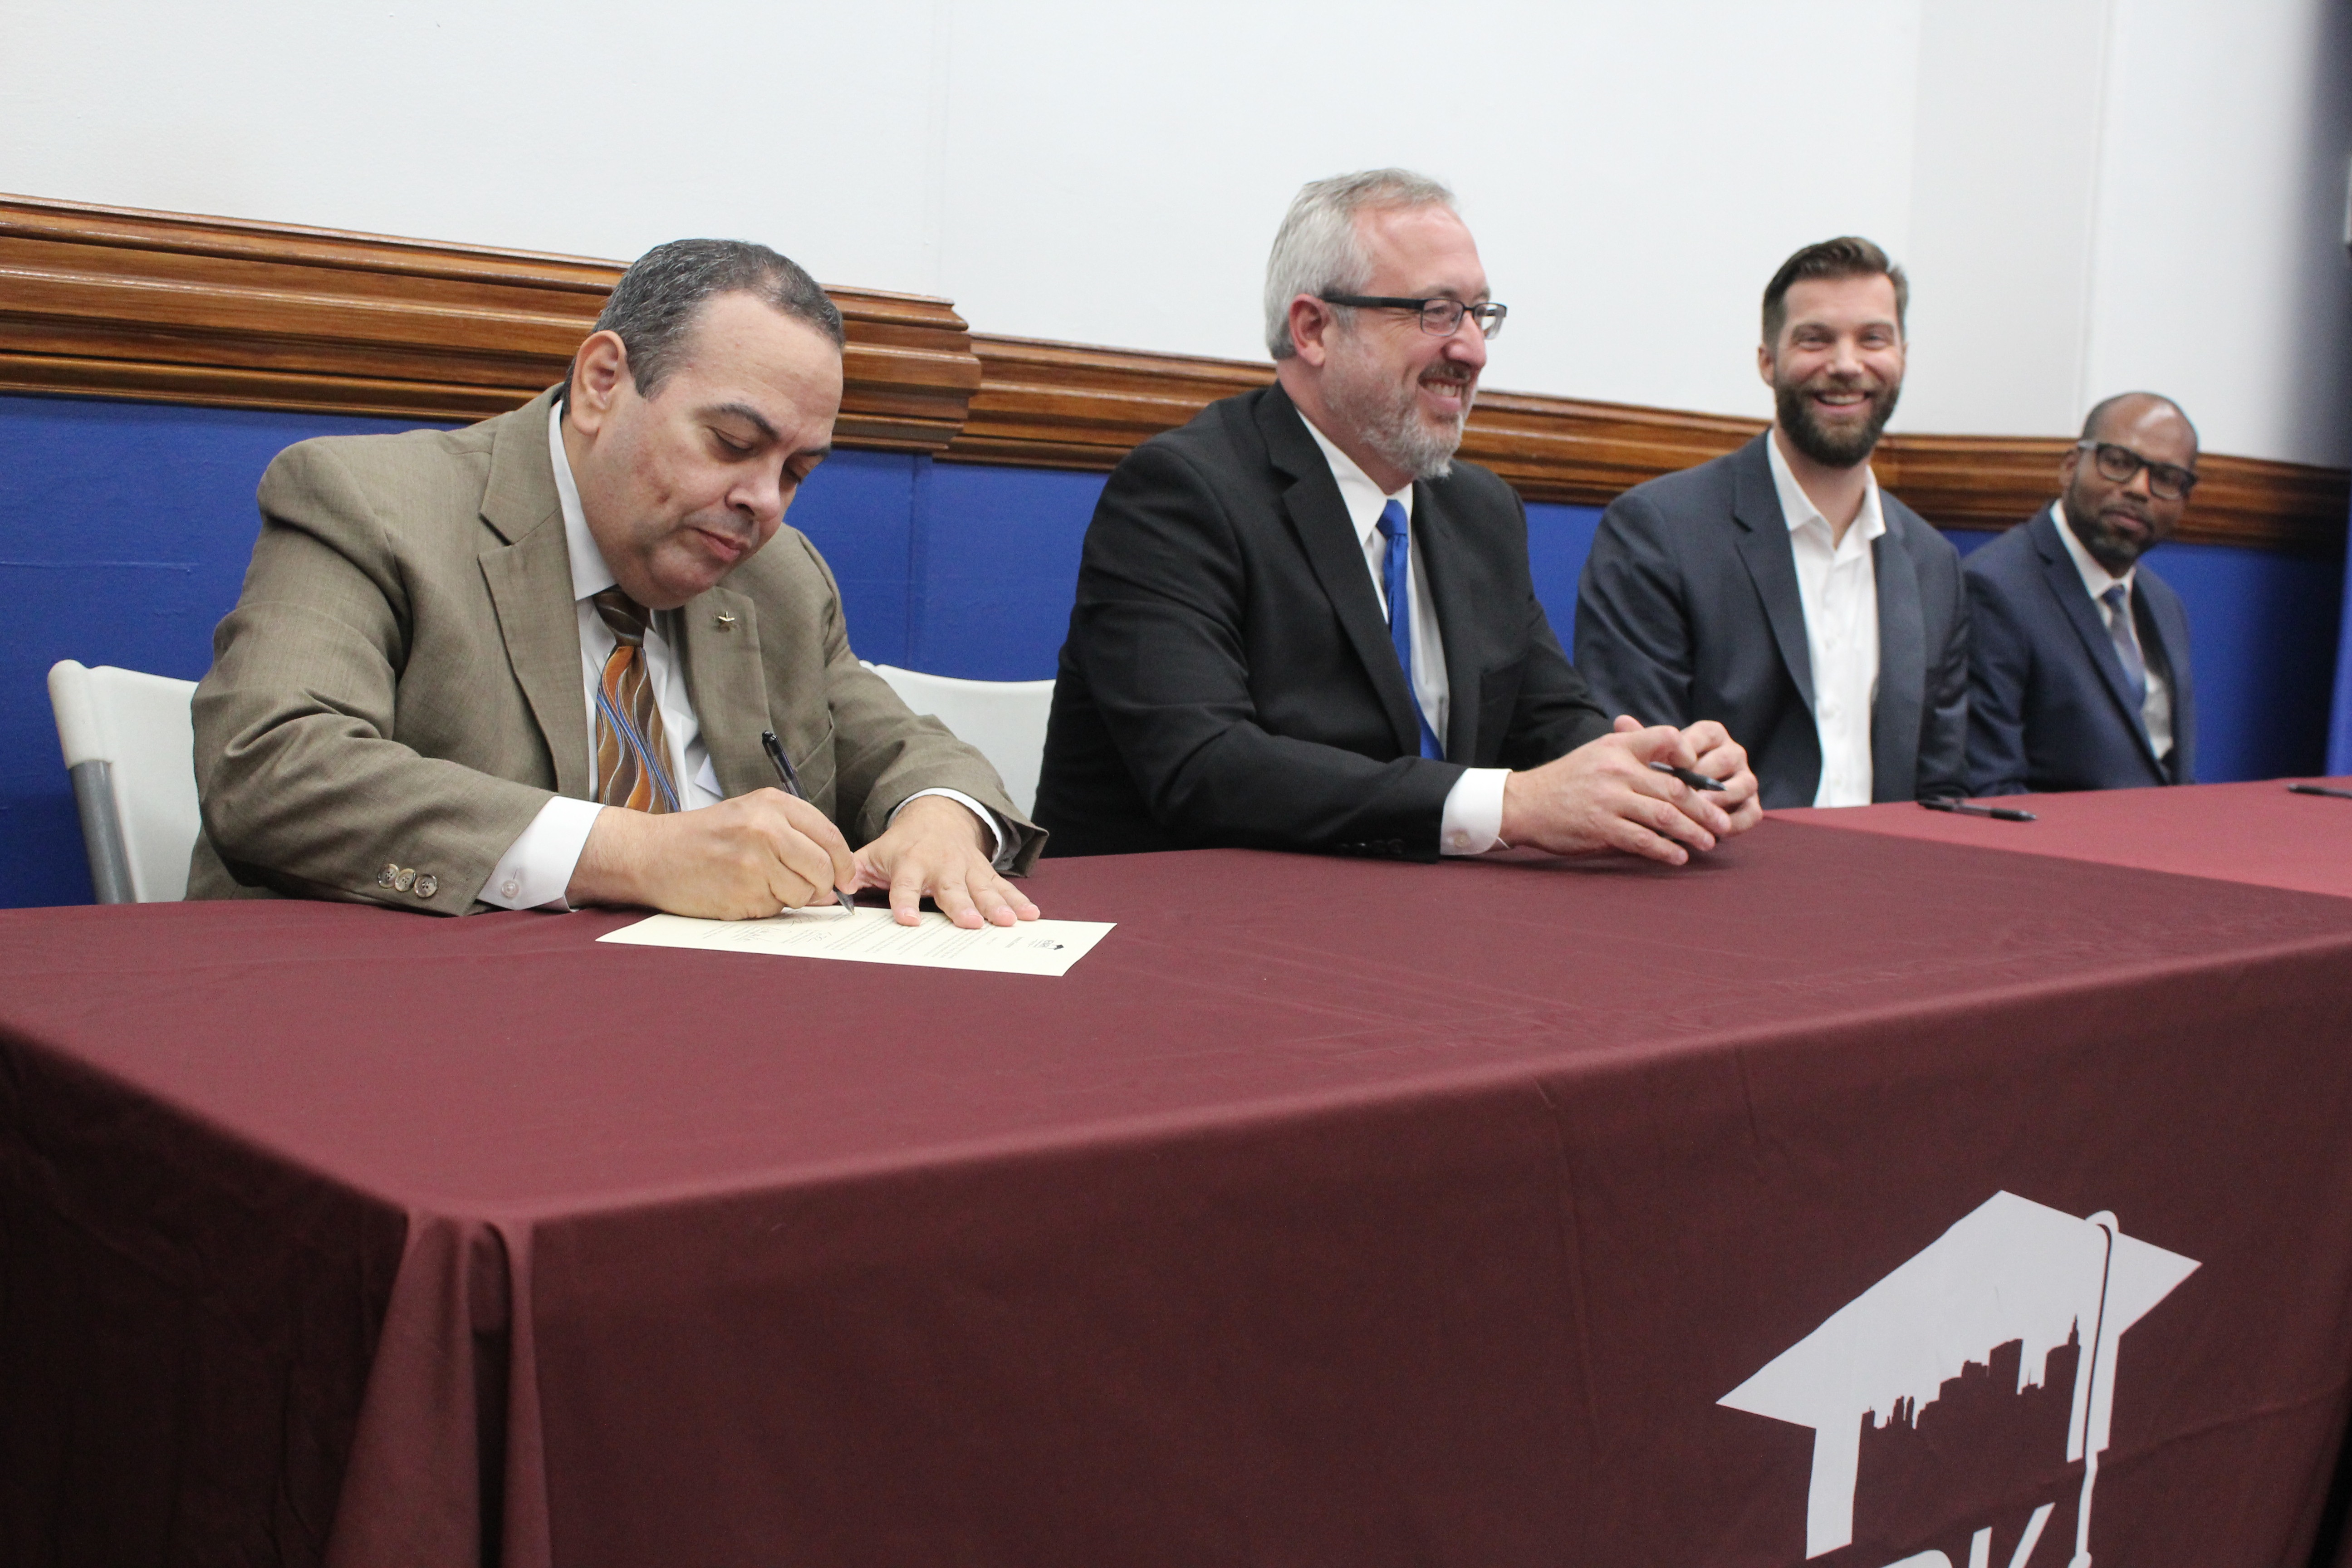 NCLC Announces Launch of Public Conversations to Strengthen Newark’s College-Going Culture